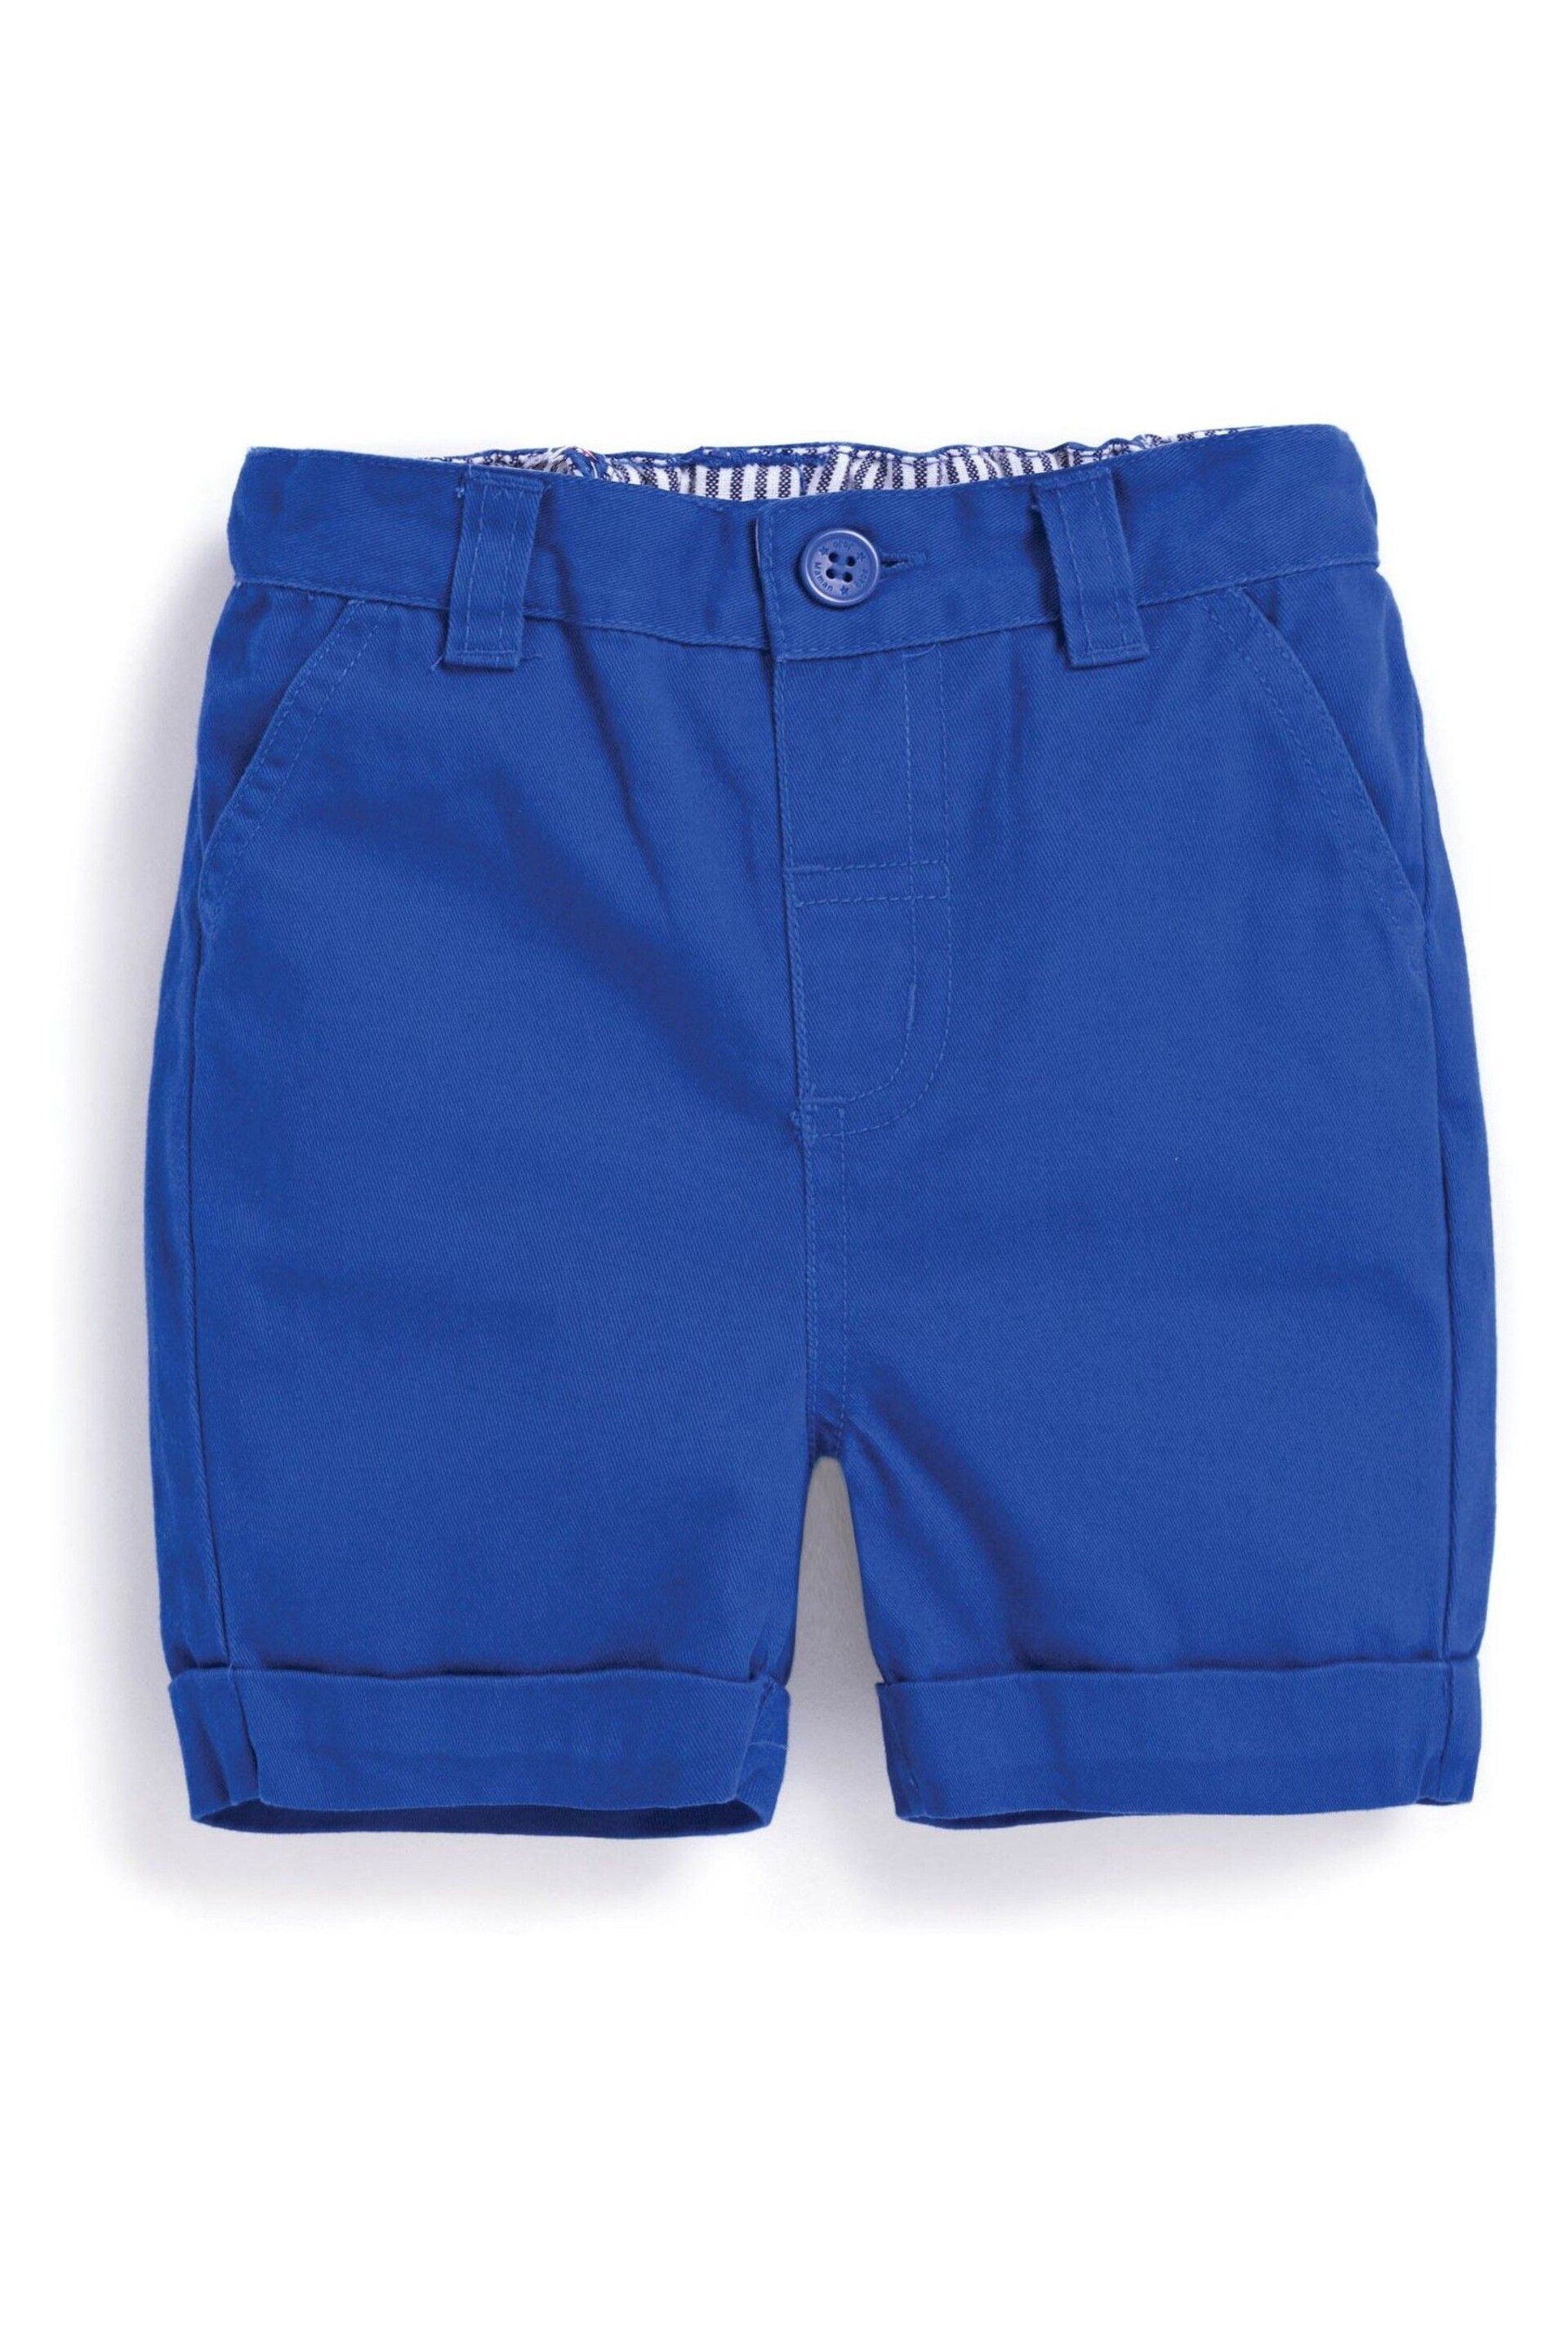 JoJo Maman Bébé Cobalt Blue Twill Chino Shorts - Image 3 of 3